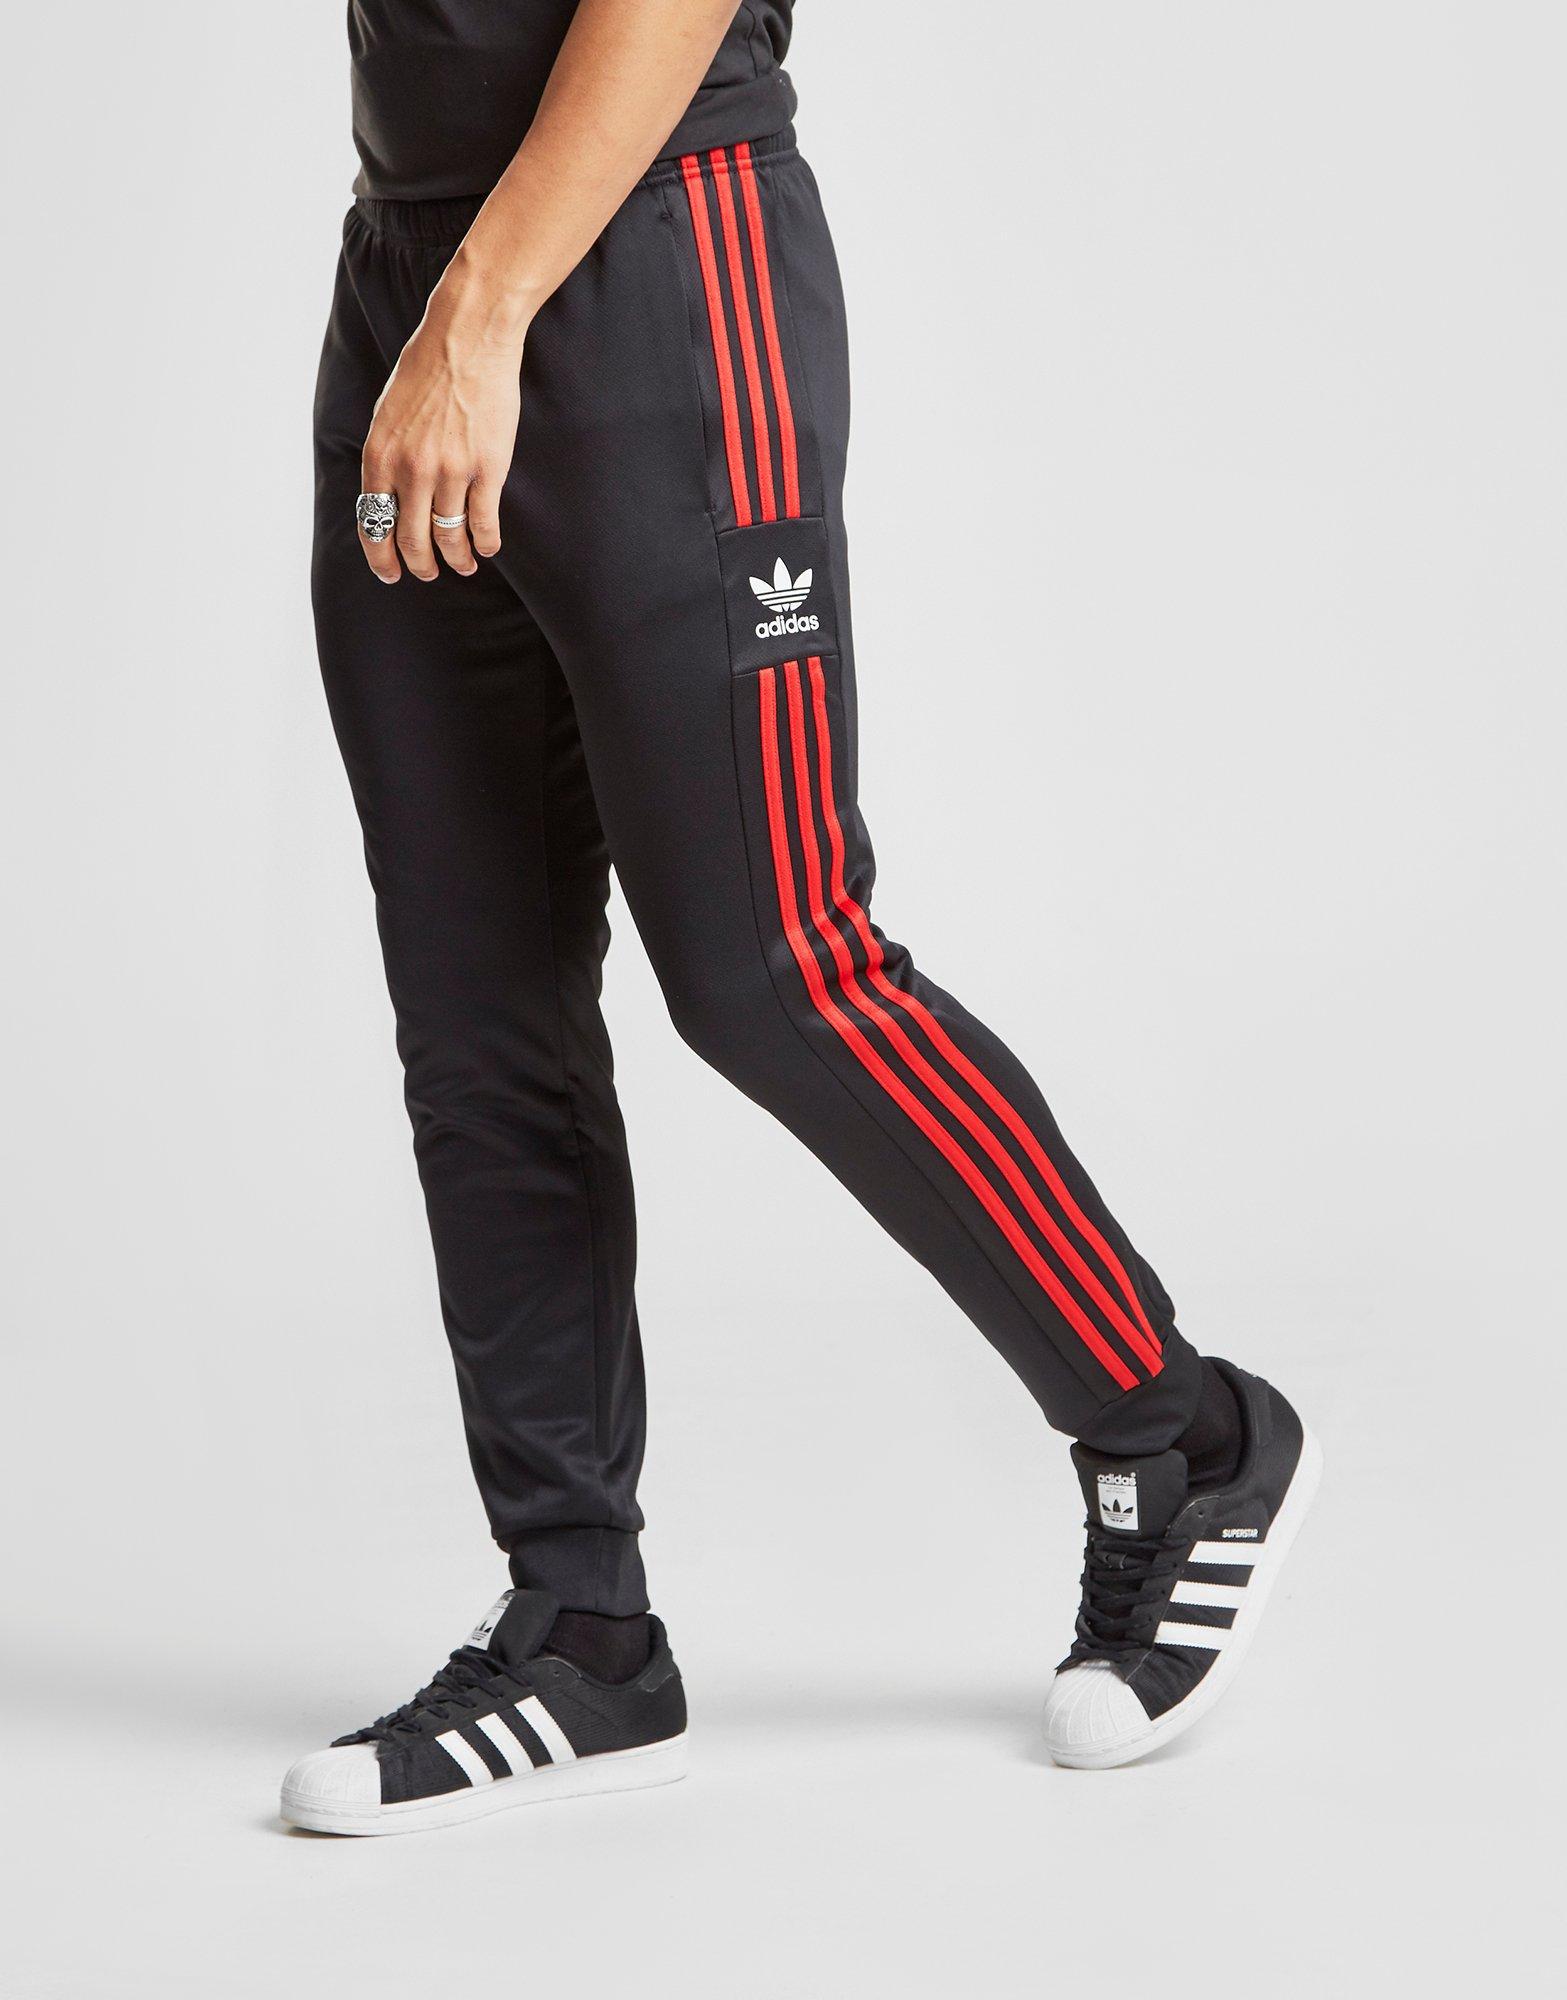 Buy > adidas originals track pants black > in stock